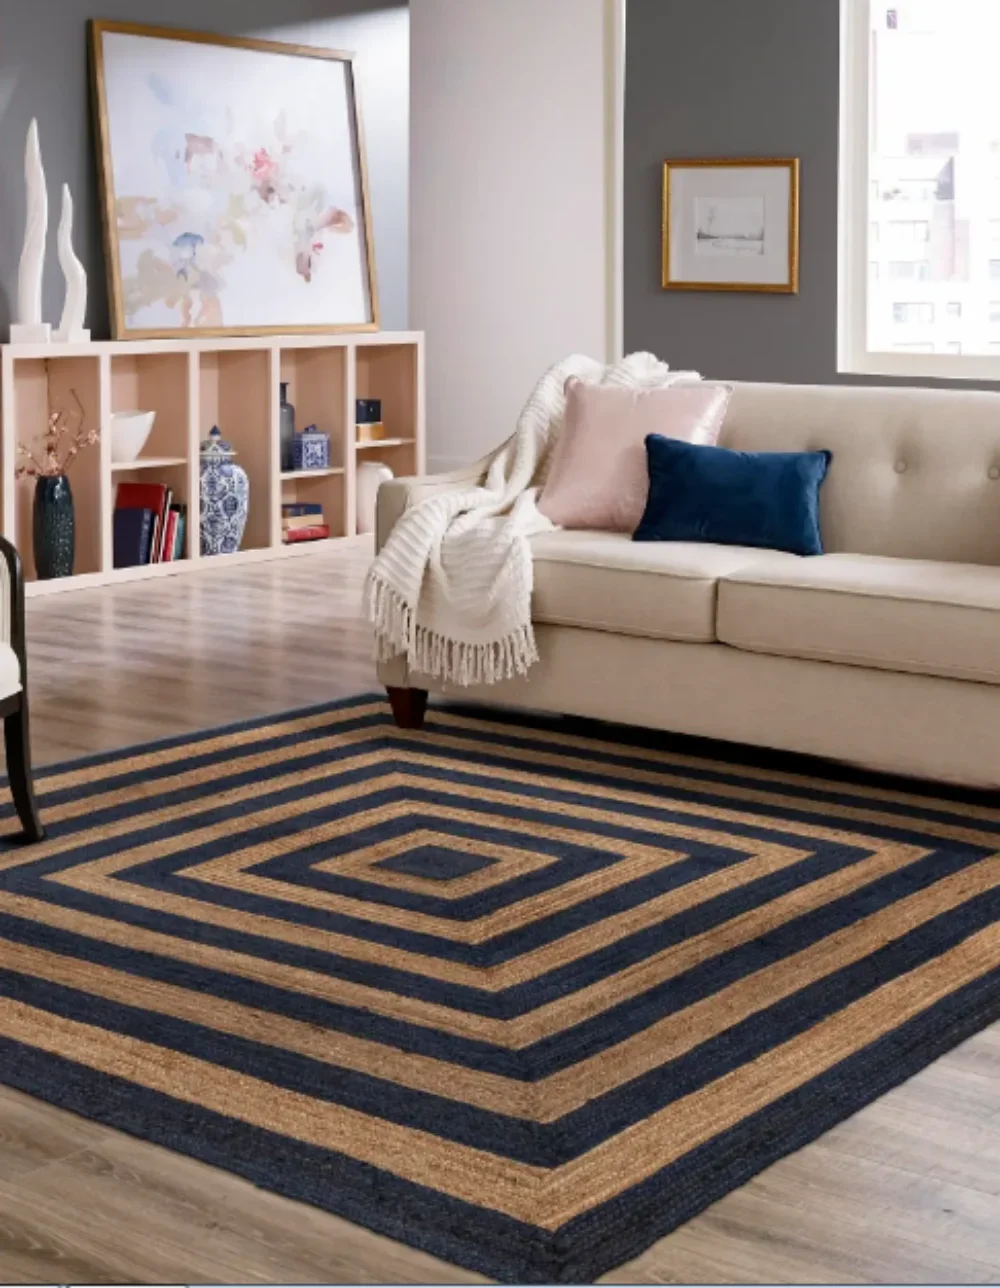 

Runner Beige Black Jute Carpets for Living Room Rug Braided Reversible Area Rug Modern Rustic Hallway Floor Mat Home Decor